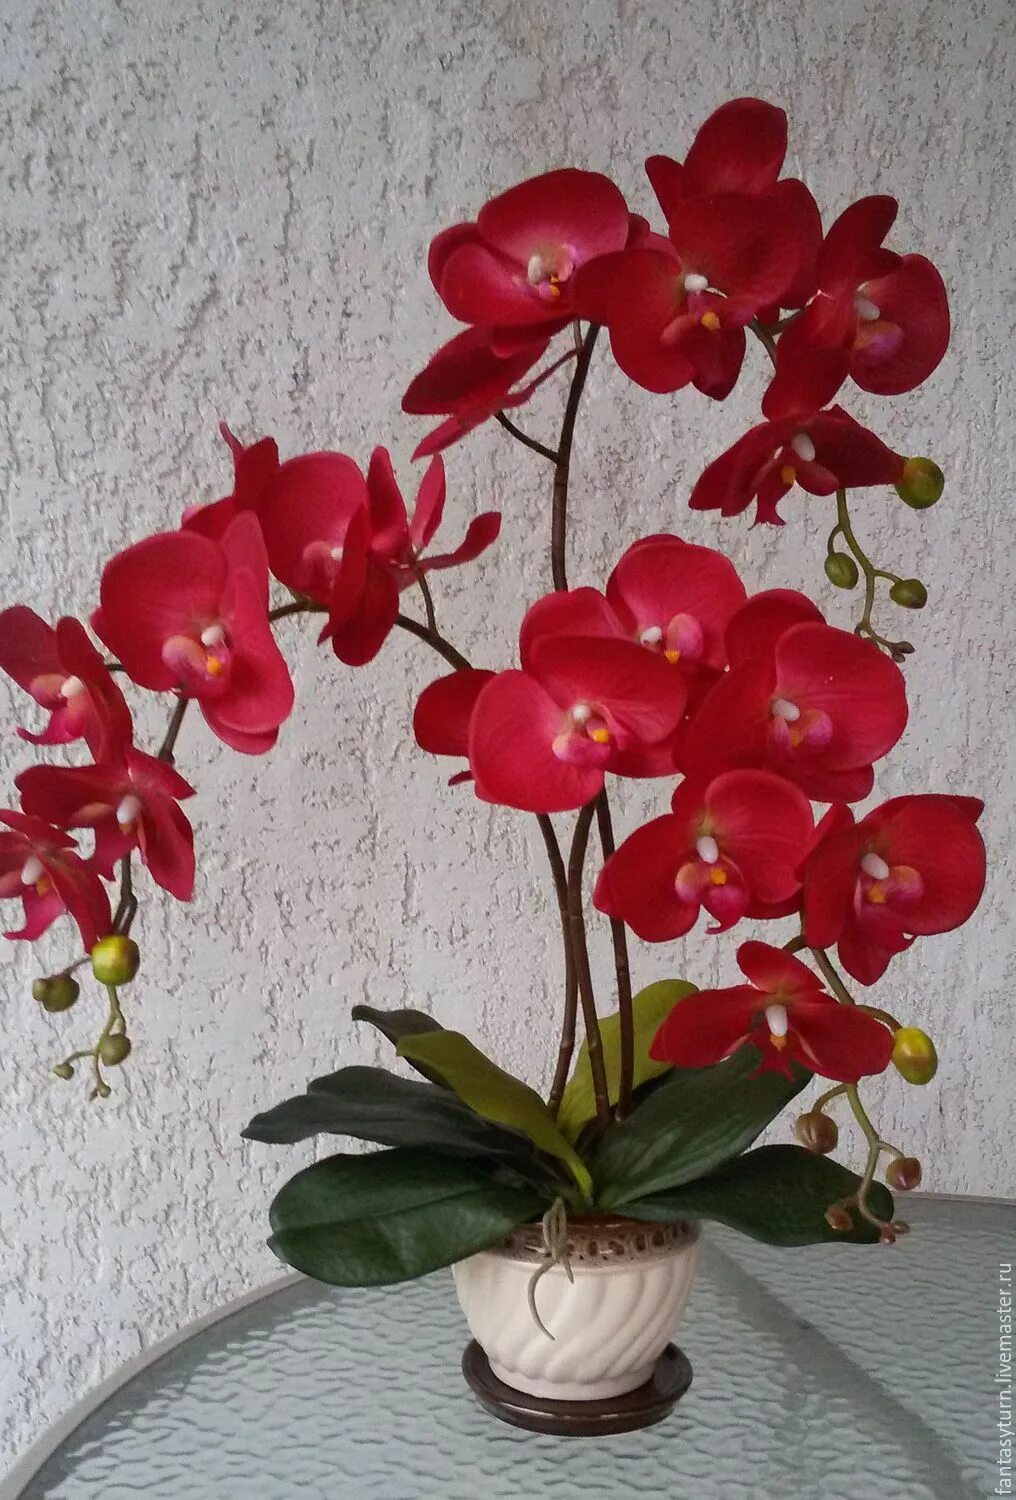 Орхидея фаленопсис. Фаленопсис красный. Красный фаленопсис фаленопсис. Орхидея фаленопсис Формидабло. Купить орхидею в горшке авито